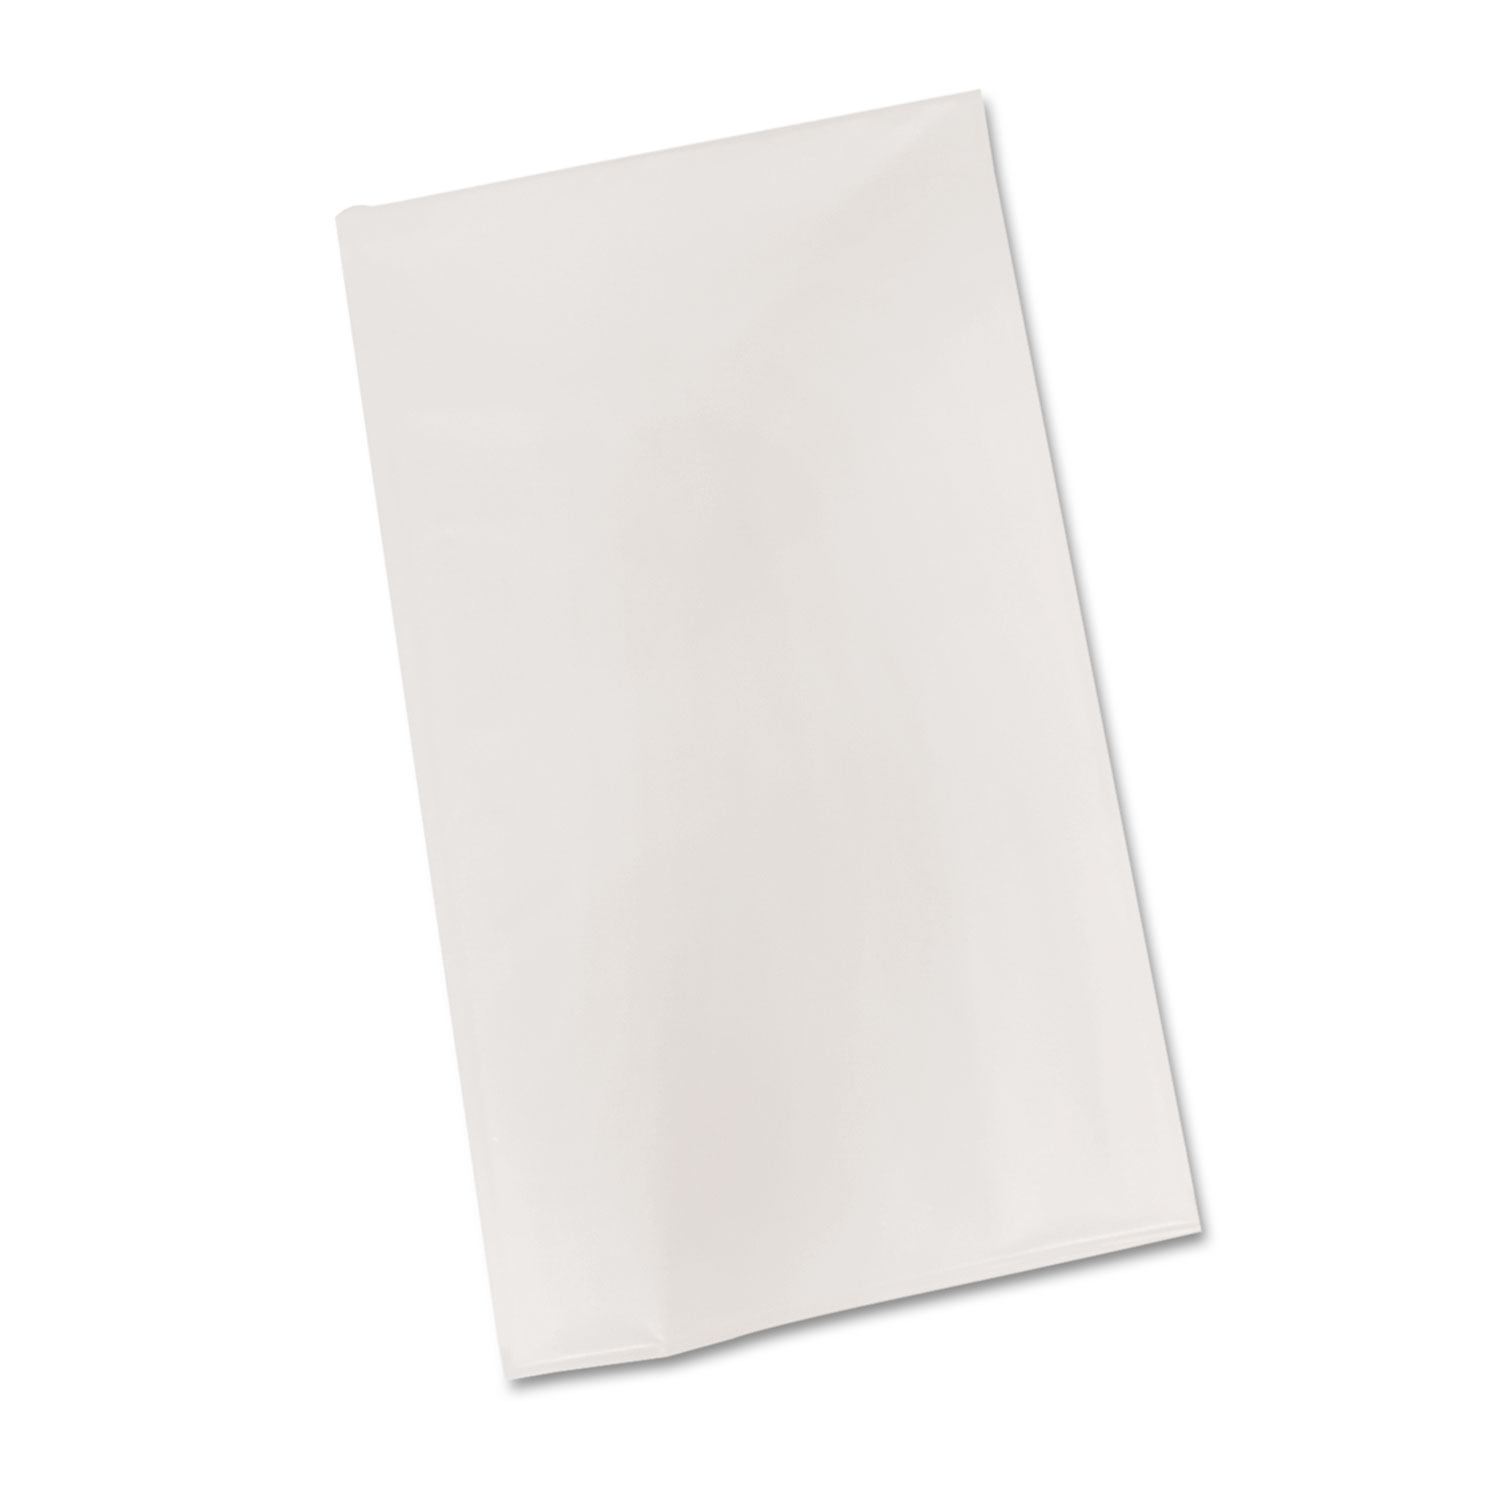 Bio-Degradable Plastic Table Cover, 54 x 108, White, 6/Pack